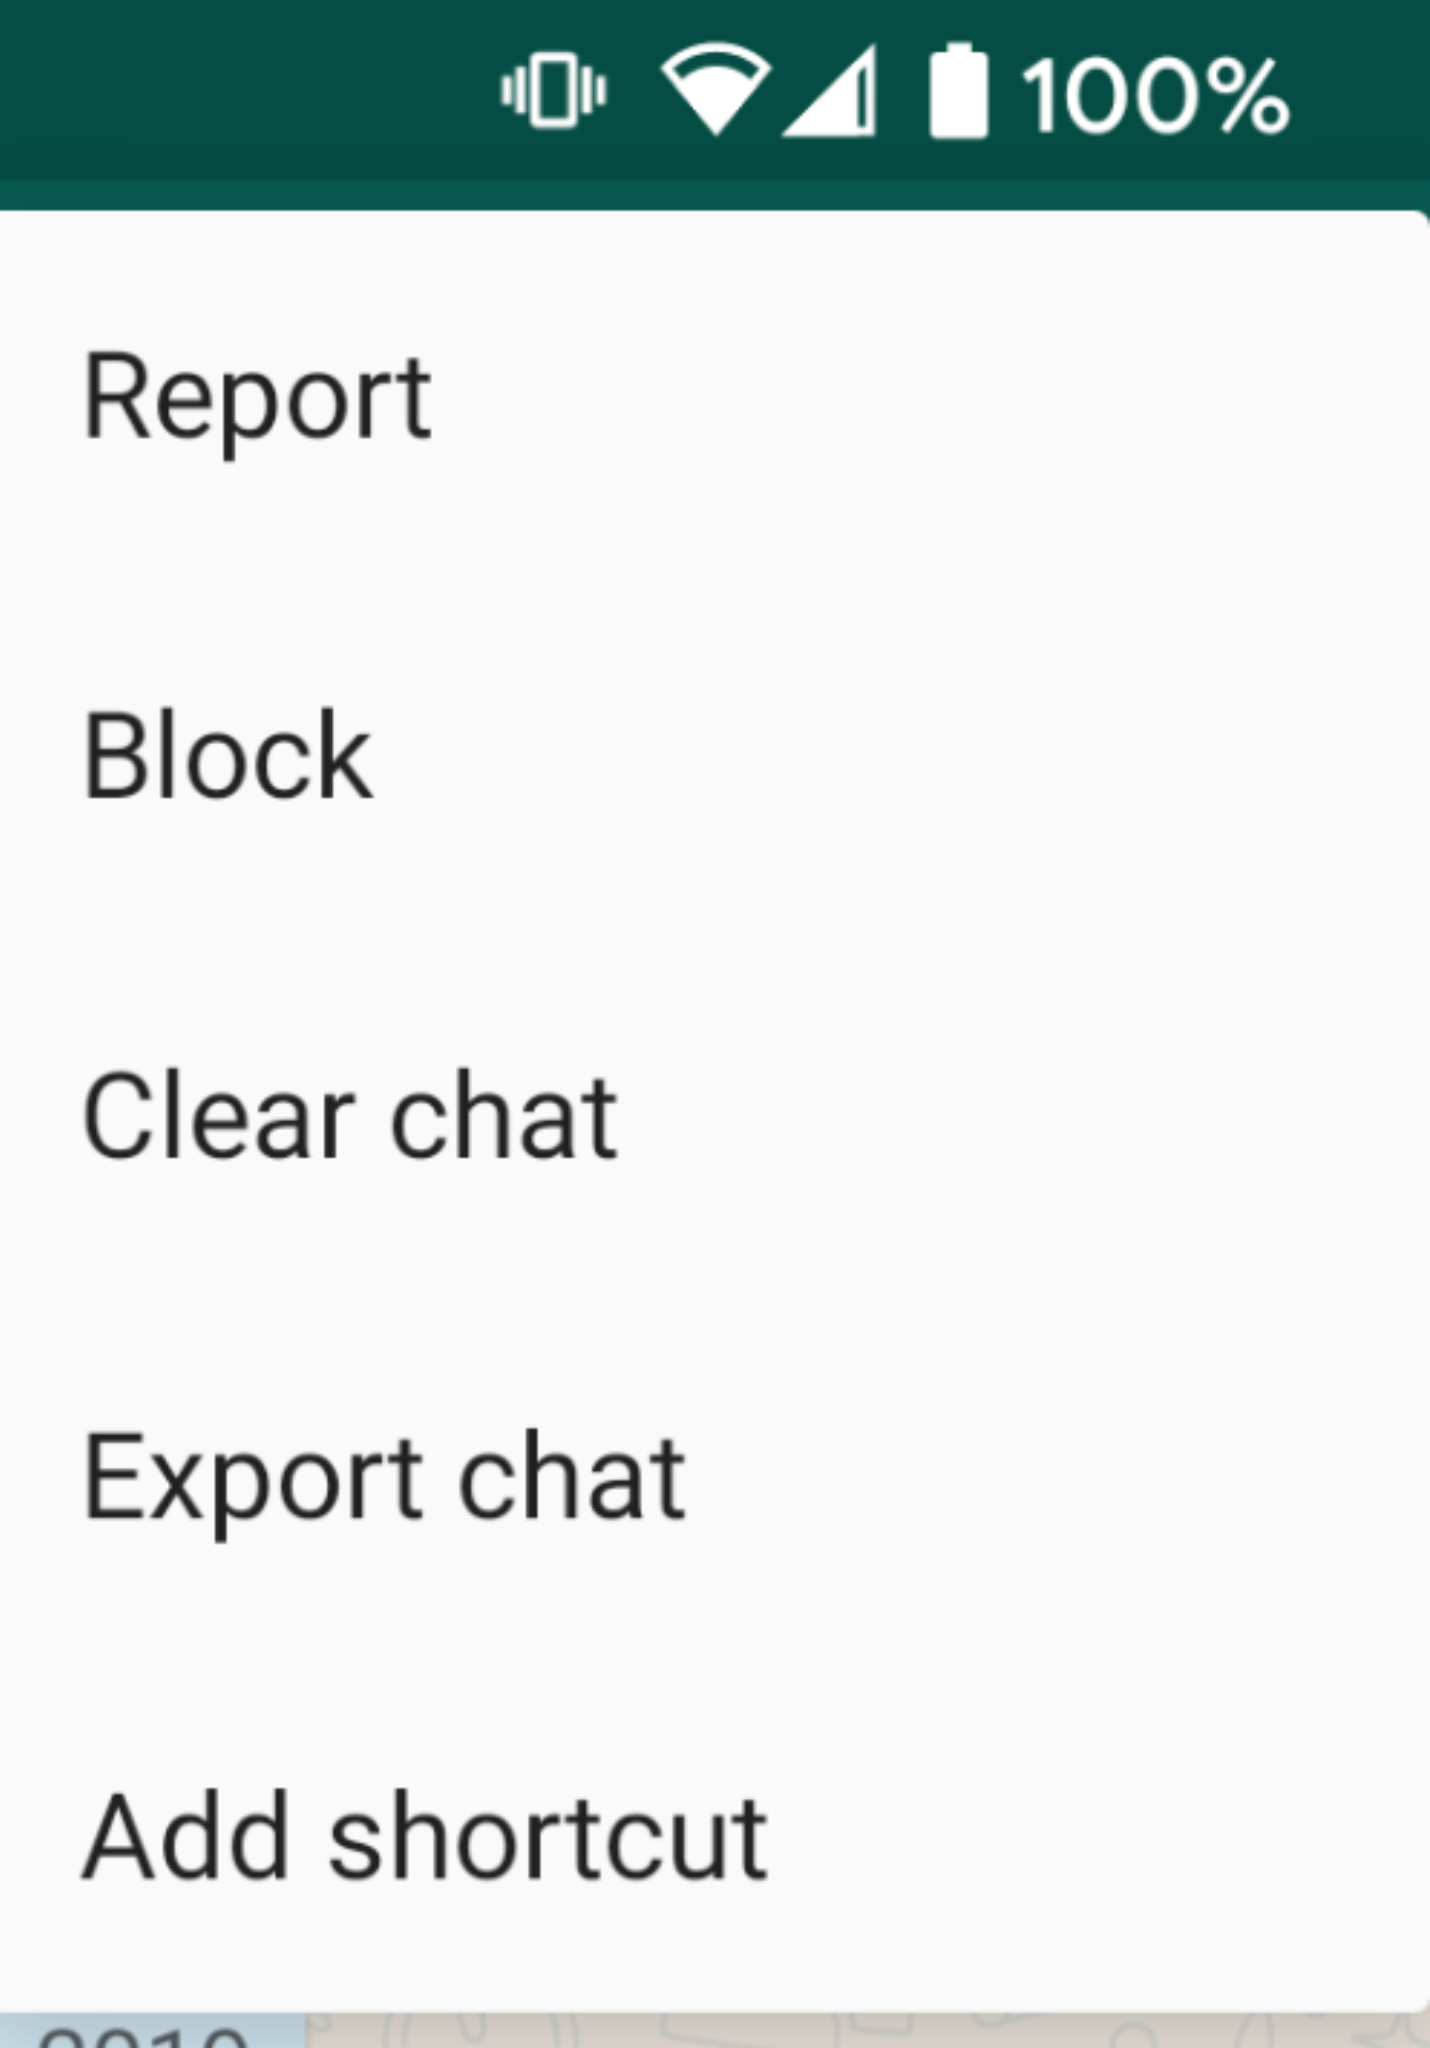 WhatsApp 'More' conversation settings